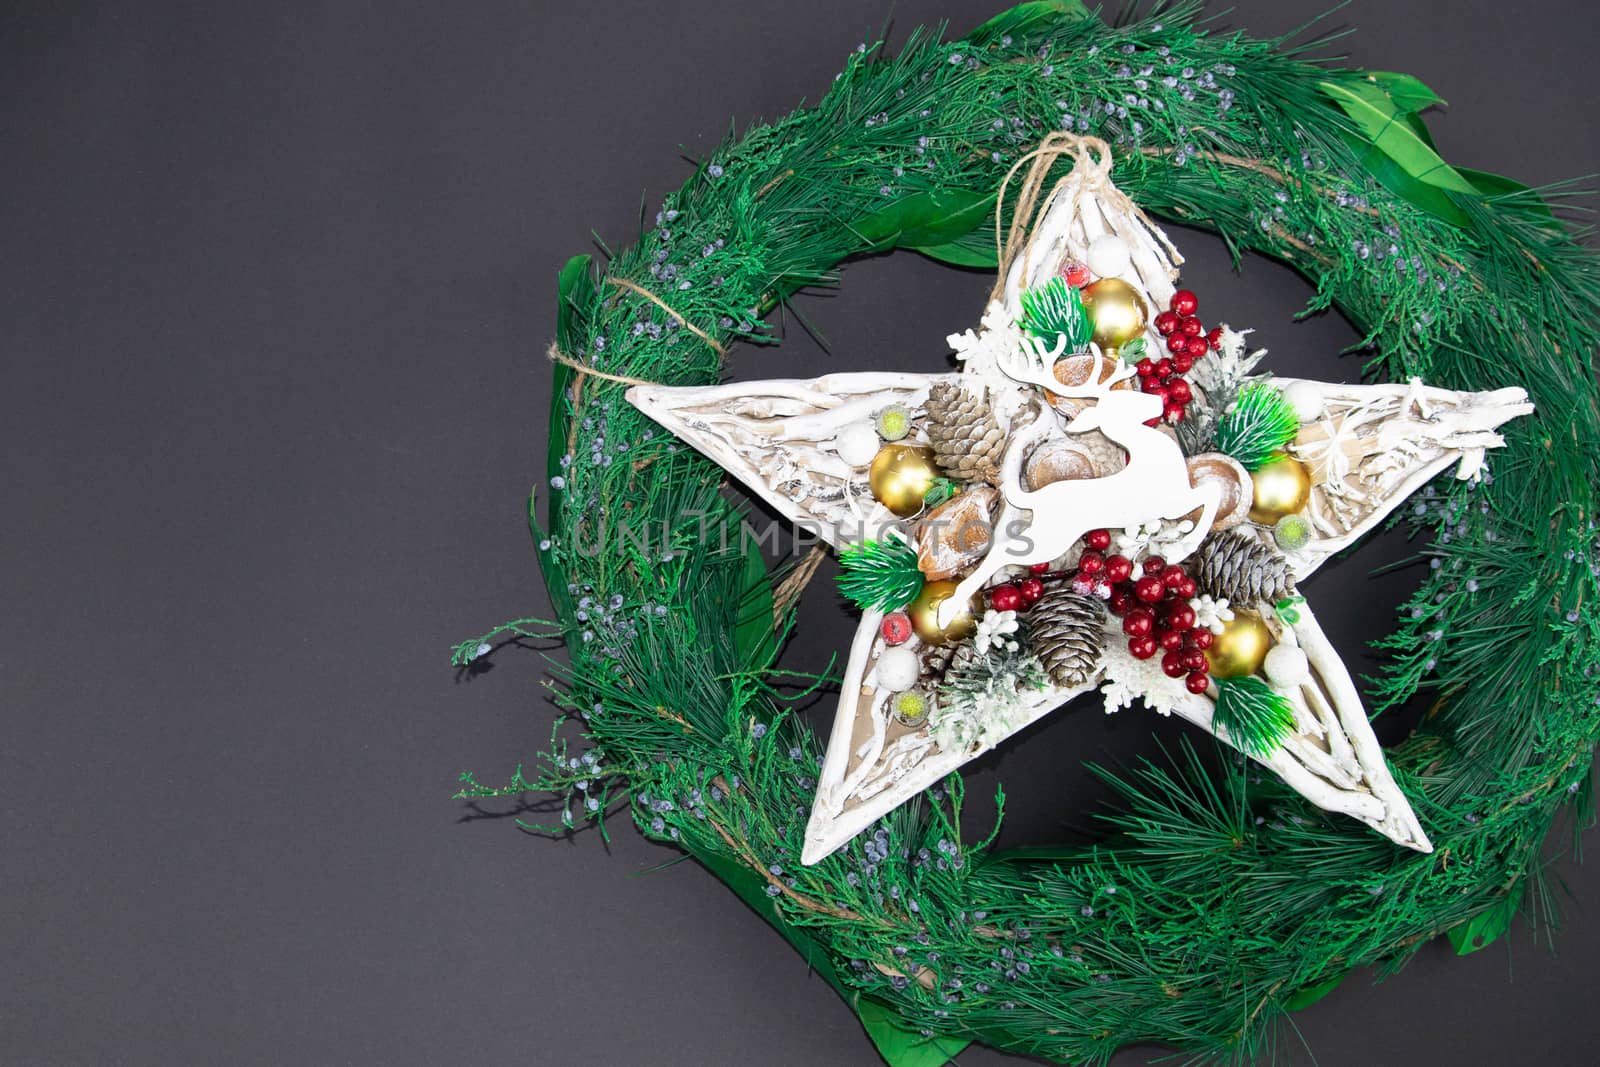 Christmas wreath with handmade star and deer by uspmen